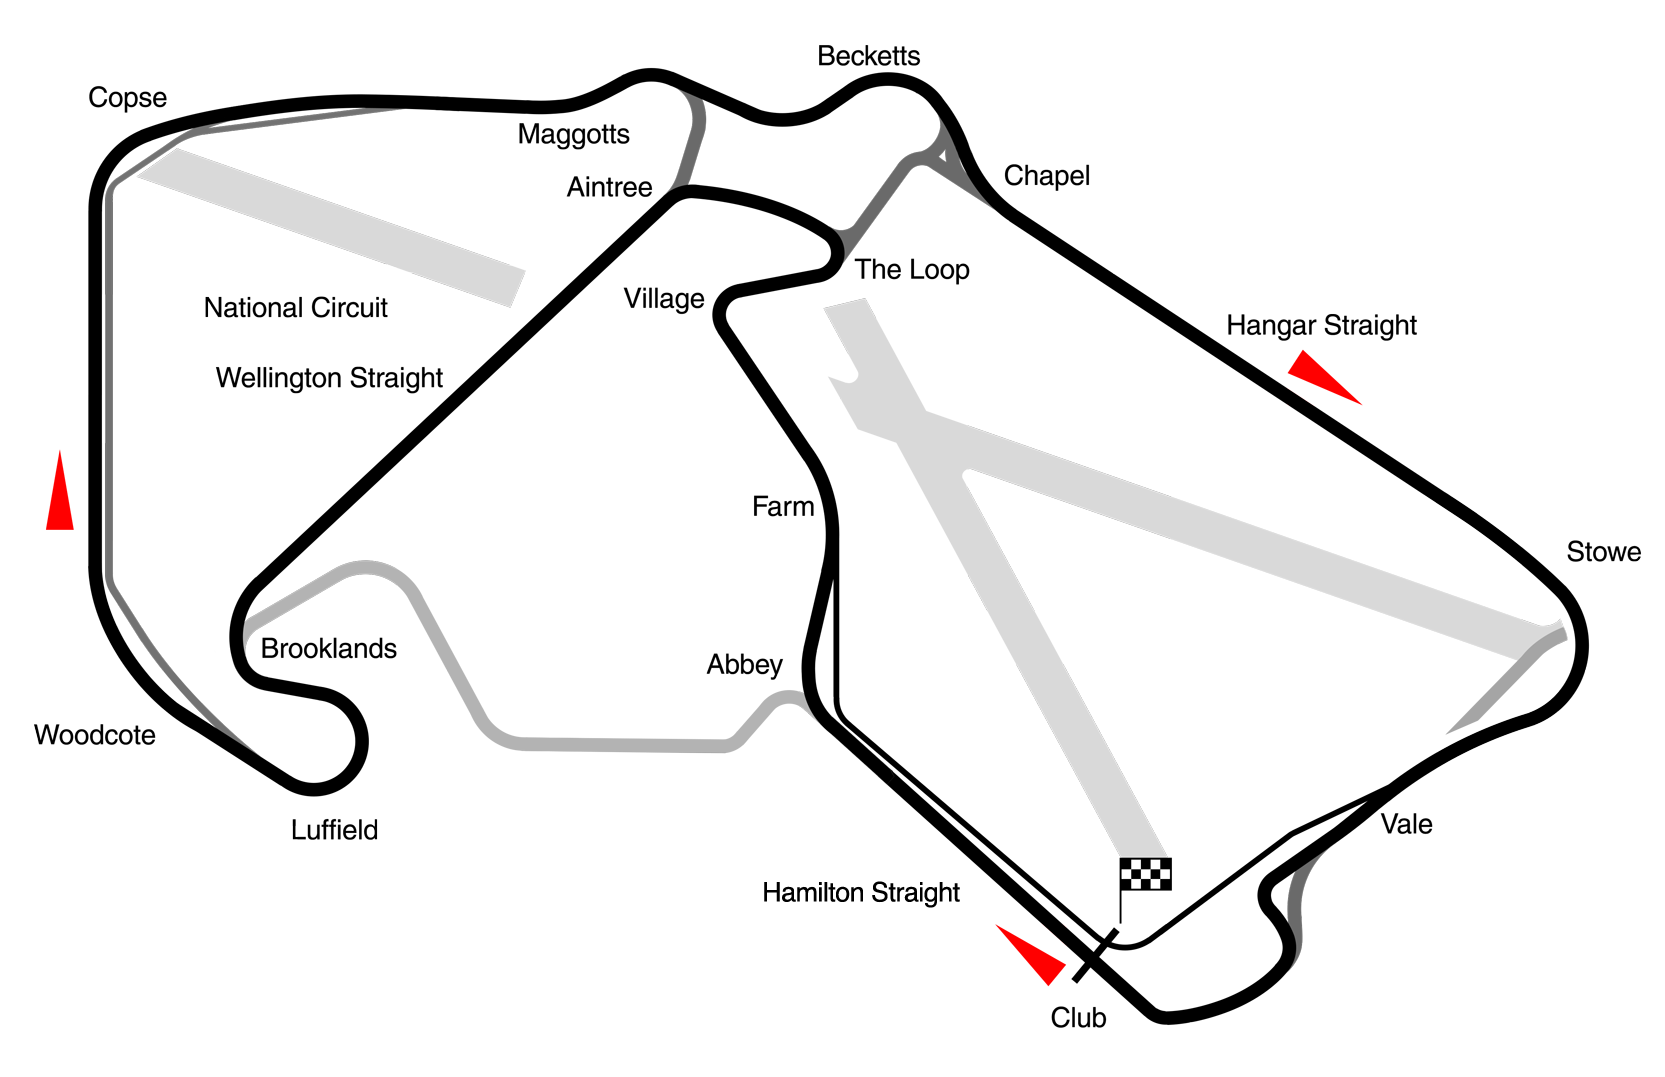 Silverstone International Circuit